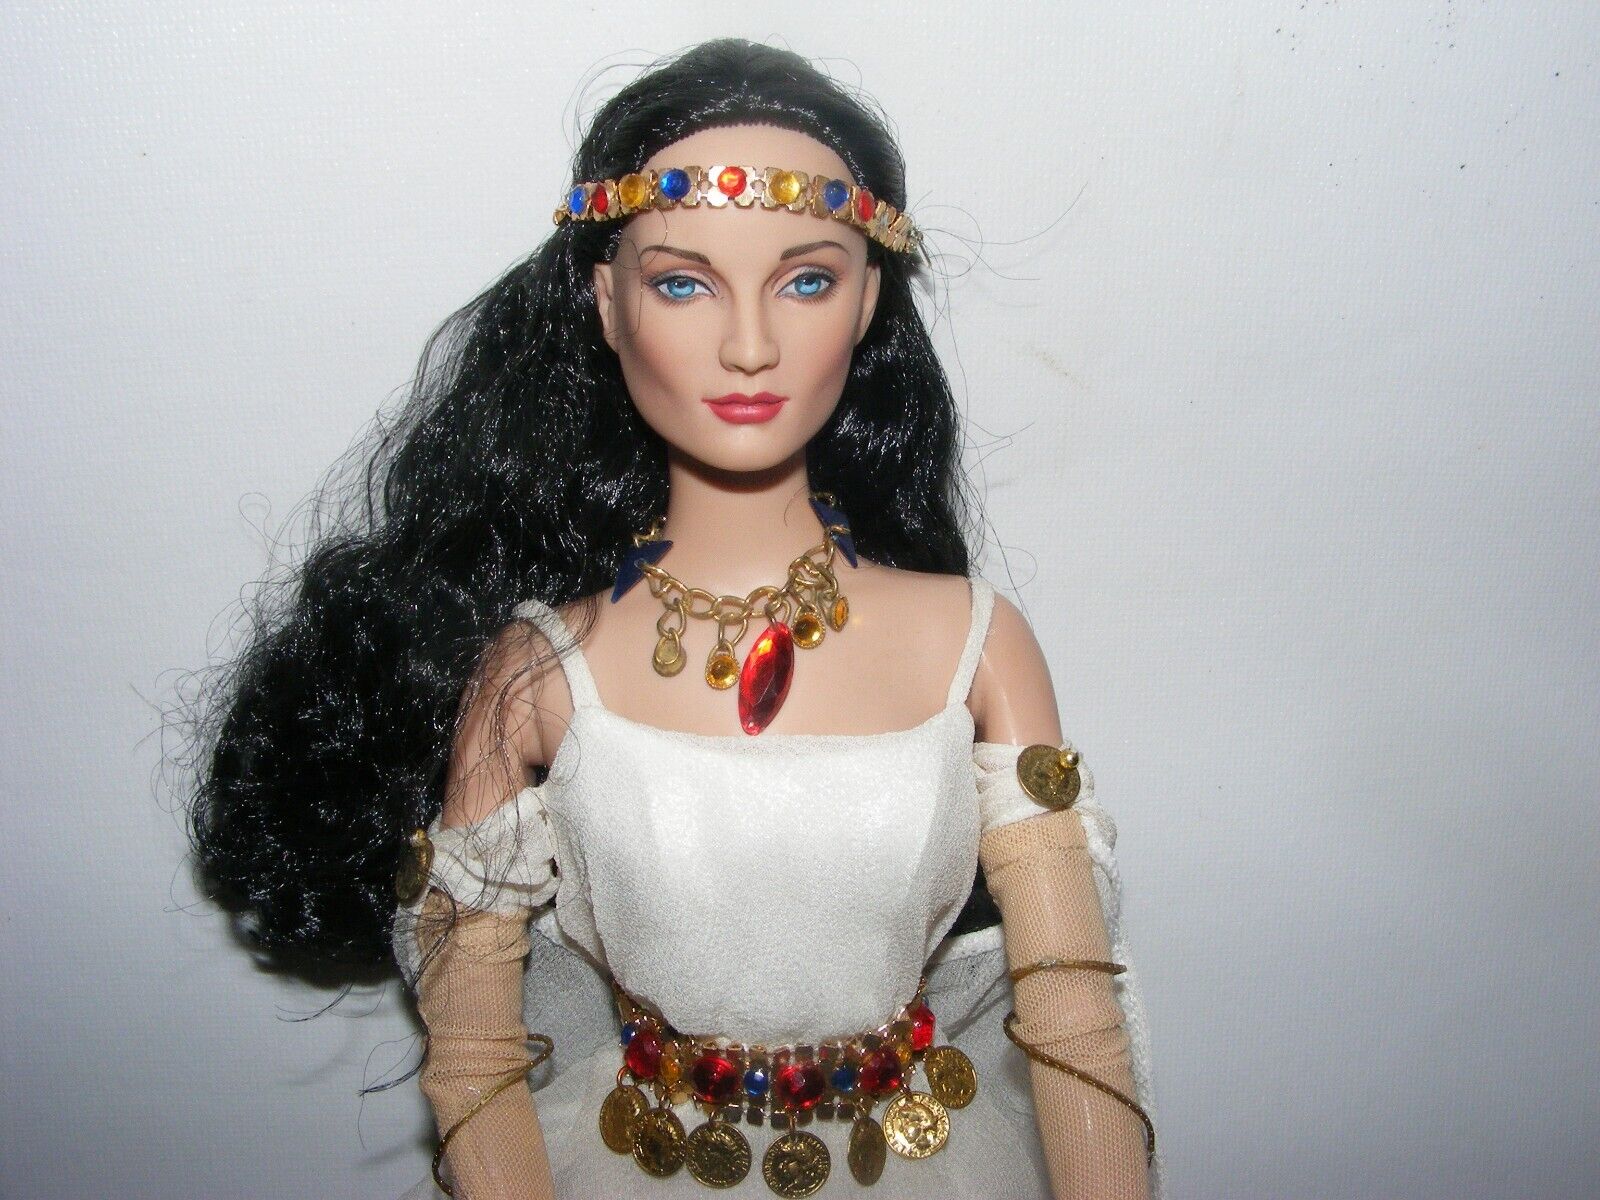 TONNER DC Stars Wonder Woman AMAZON PRINCESS Special Edition doll